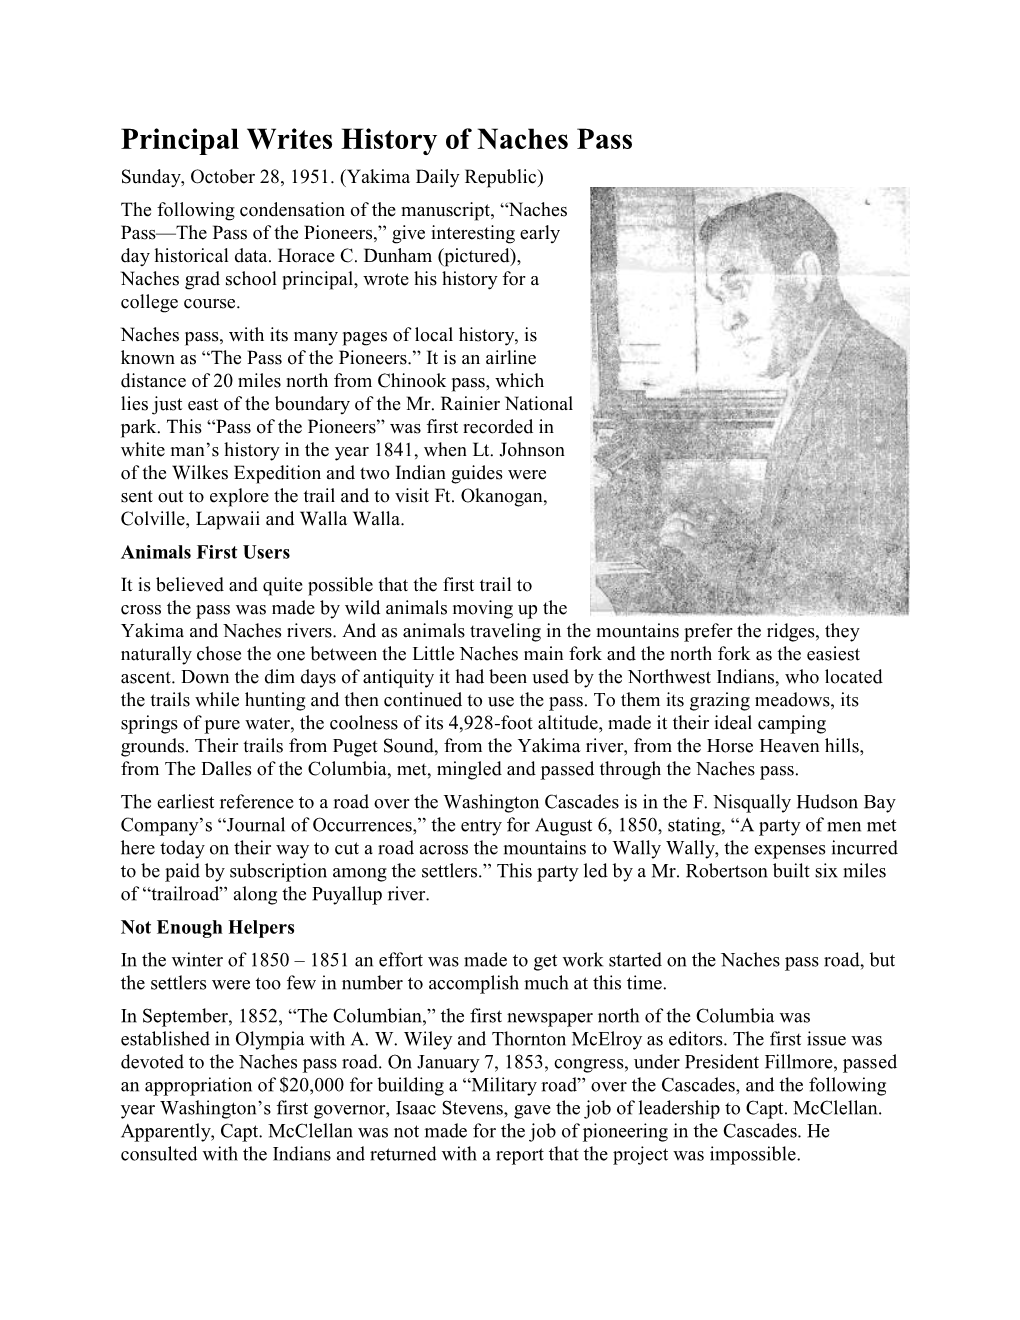 Writes History of Naches Pass Sunday, October 28, 1951